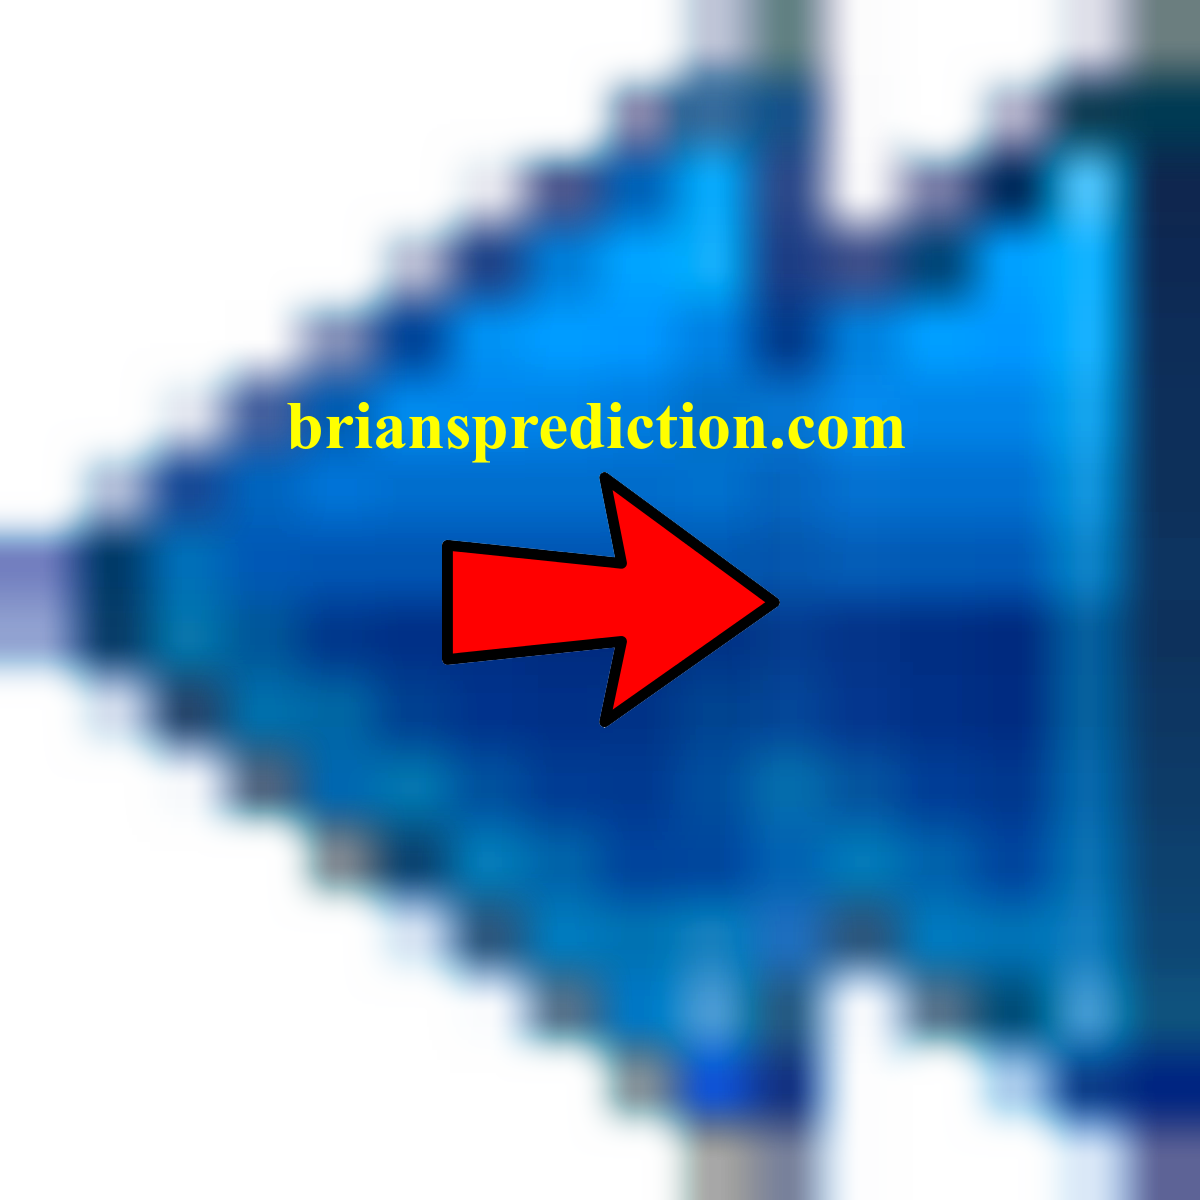 Start Brian Ladd Pychic Prediction 2019
Start Brian Ladd Pychic Prediction 2019
